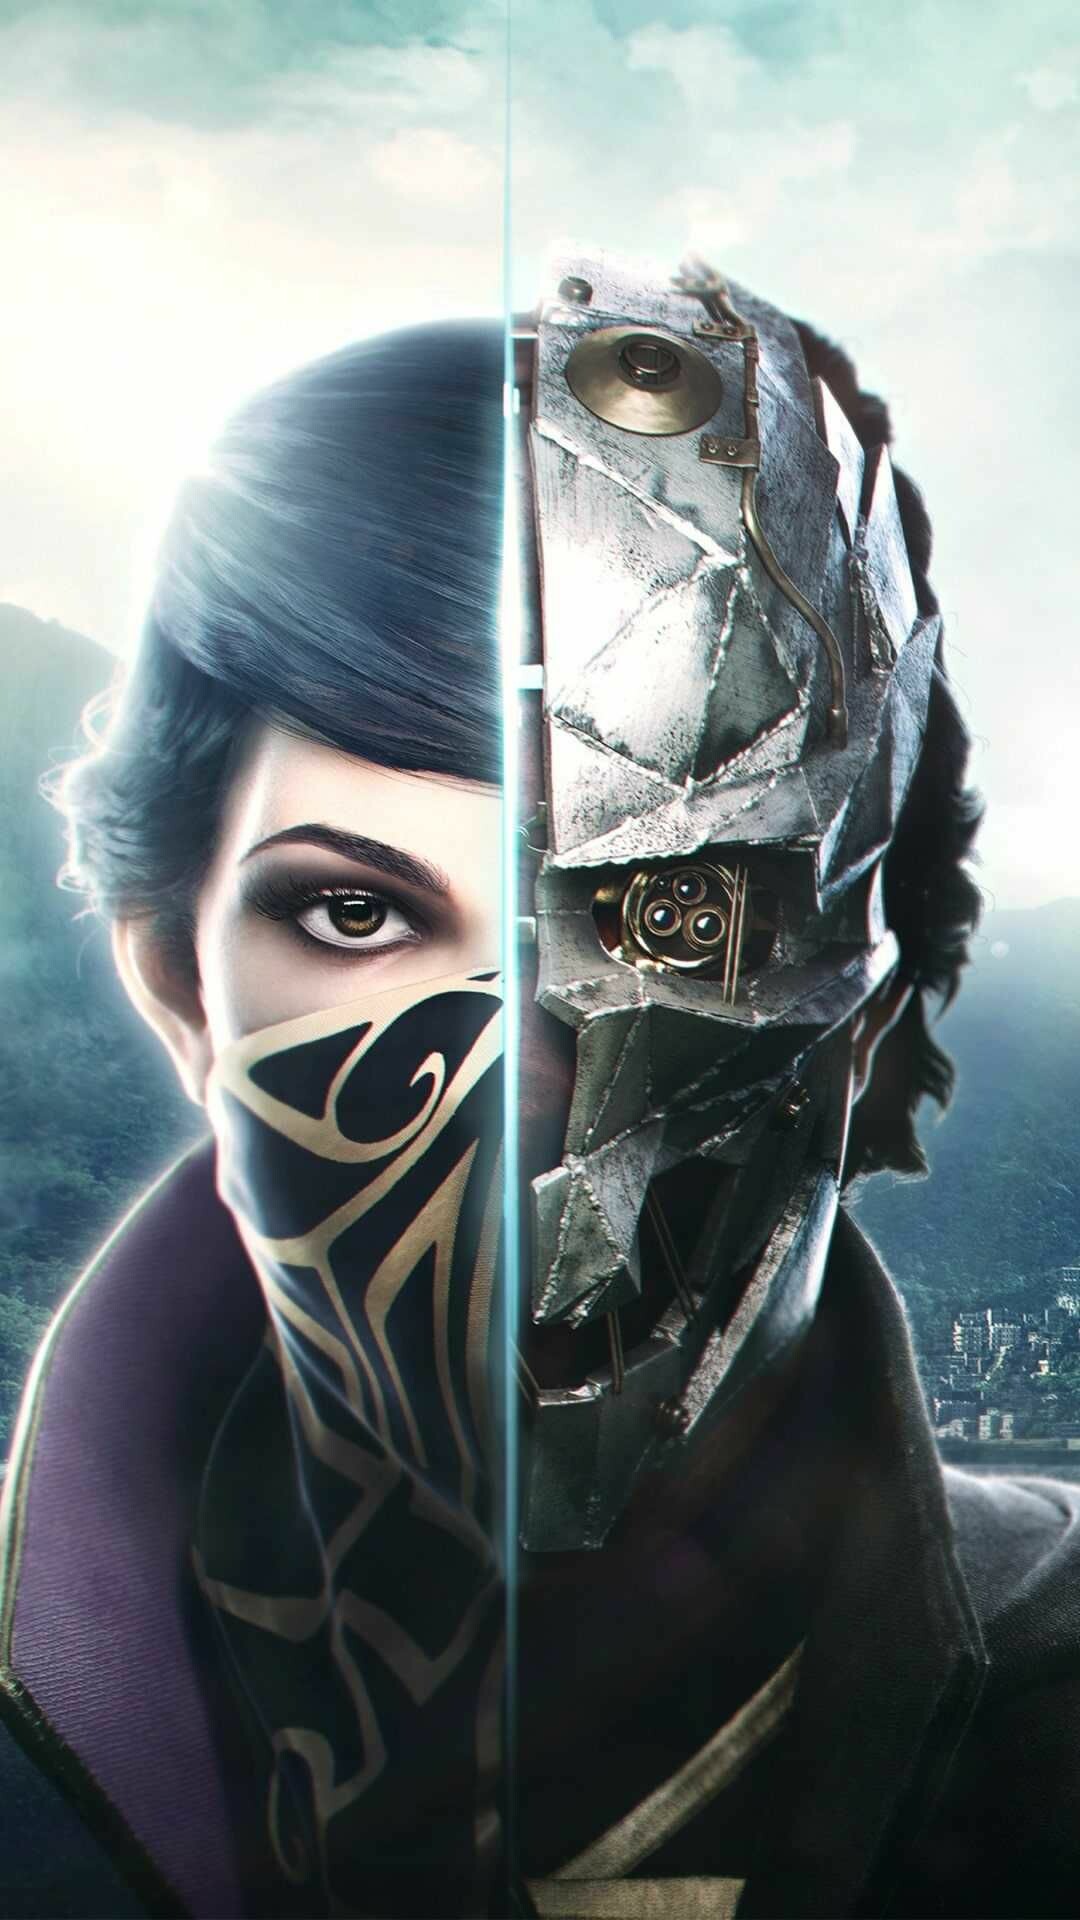 Dishonored: Emily Kaldwin, Corvo Attano, Fictional character of Arkane Studios' series. 1080x1920 Full HD Background.